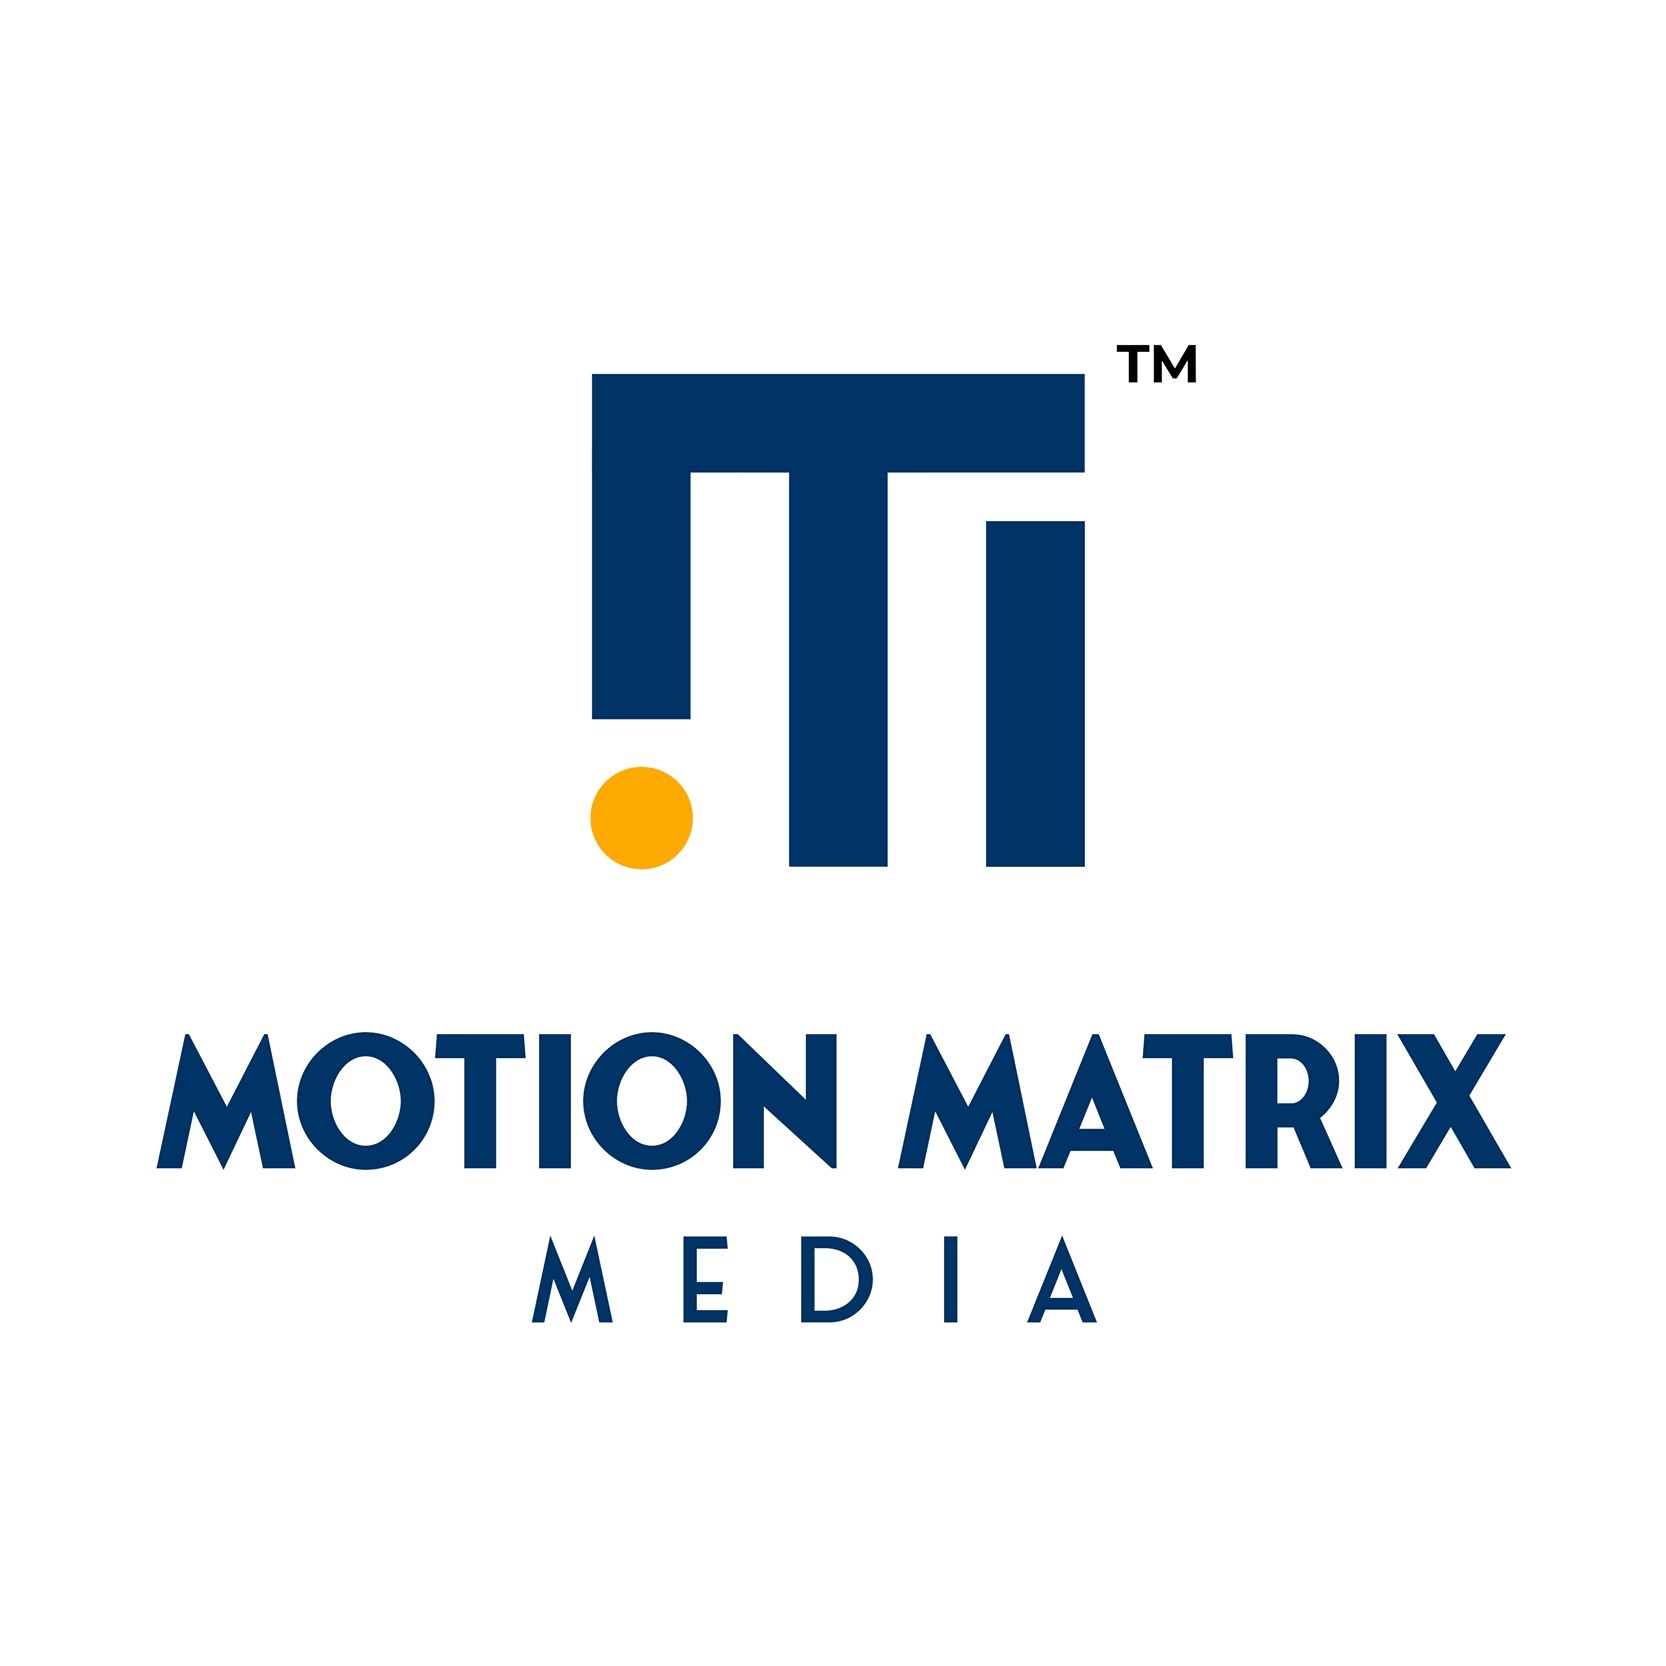 Motion Matrix Media|Architect|Professional Services